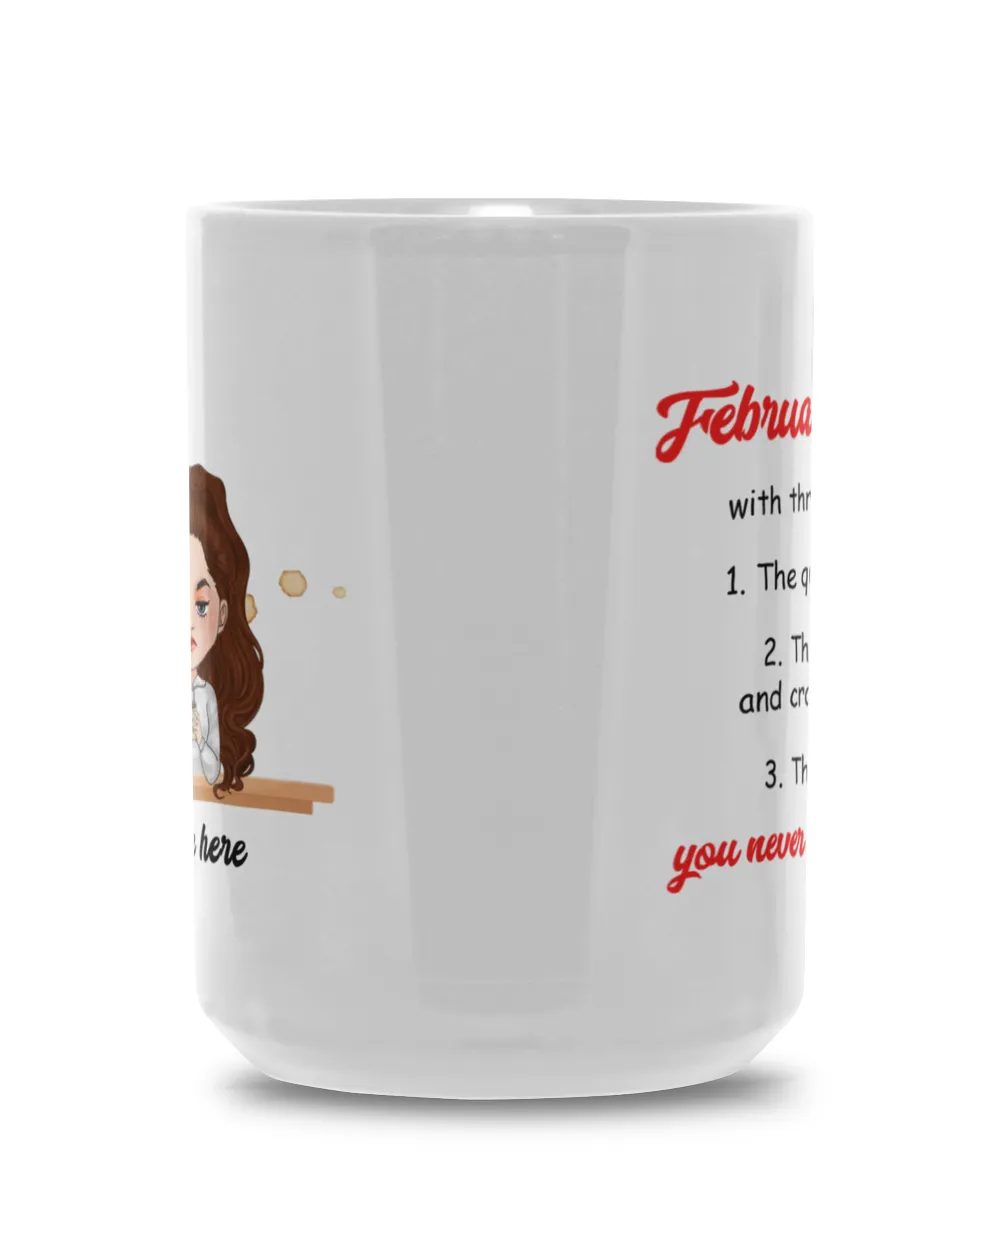 Grumpy Girl Coffee Custom Mug February Girl With Three Sides Personalized Gift